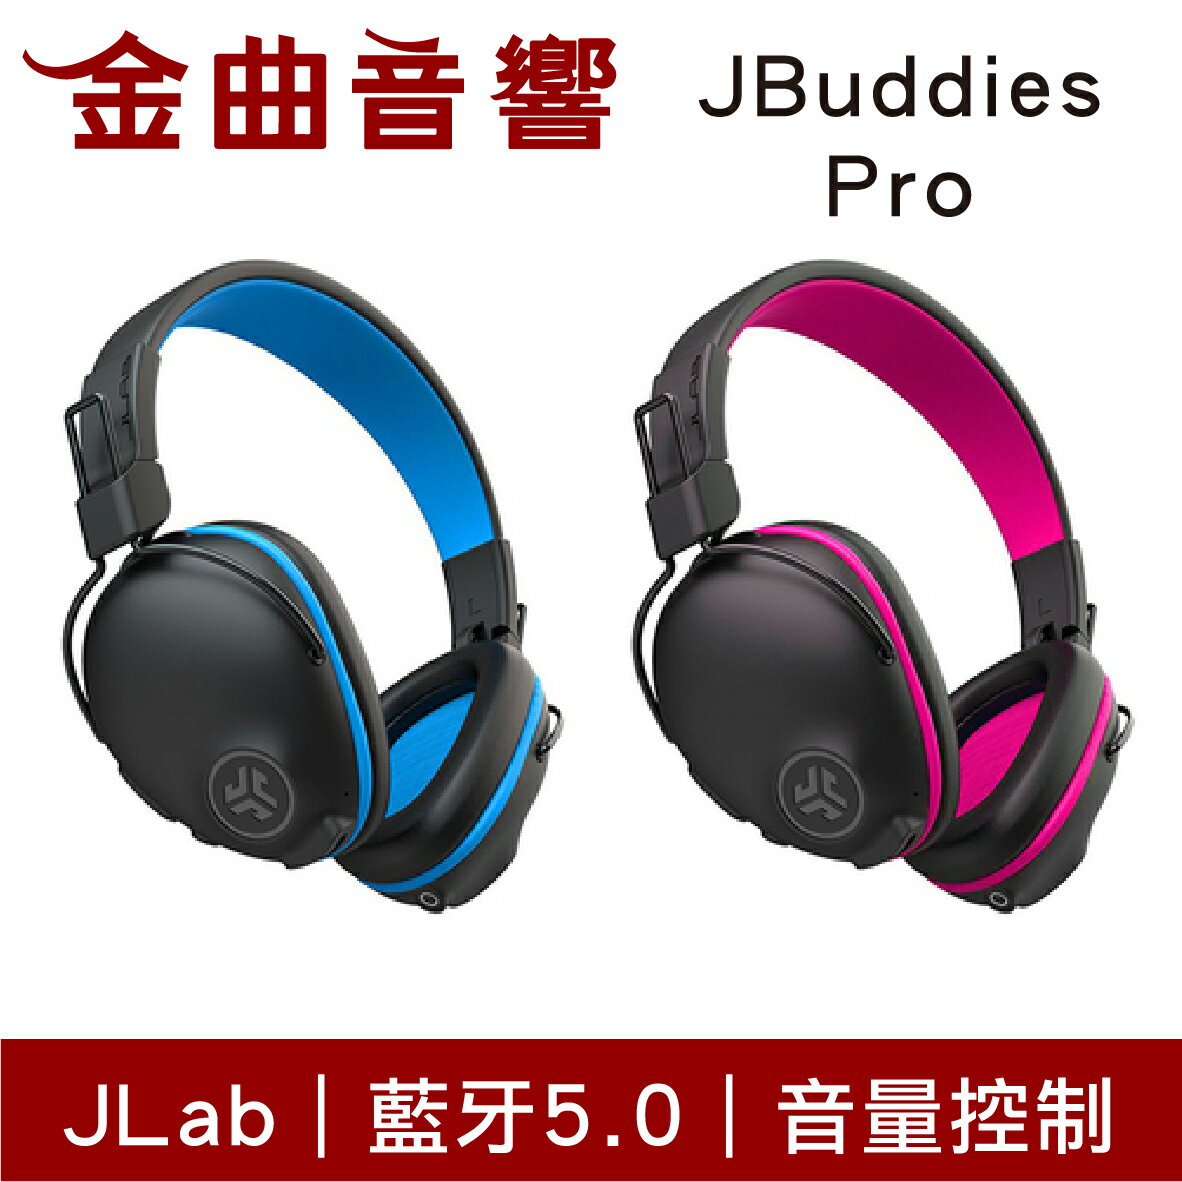 JLAB JBuddies Pro 音量控制 內建麥克風 40mm驅動 兒童 青少年 藍牙 耳罩式 耳機 | 金曲音響